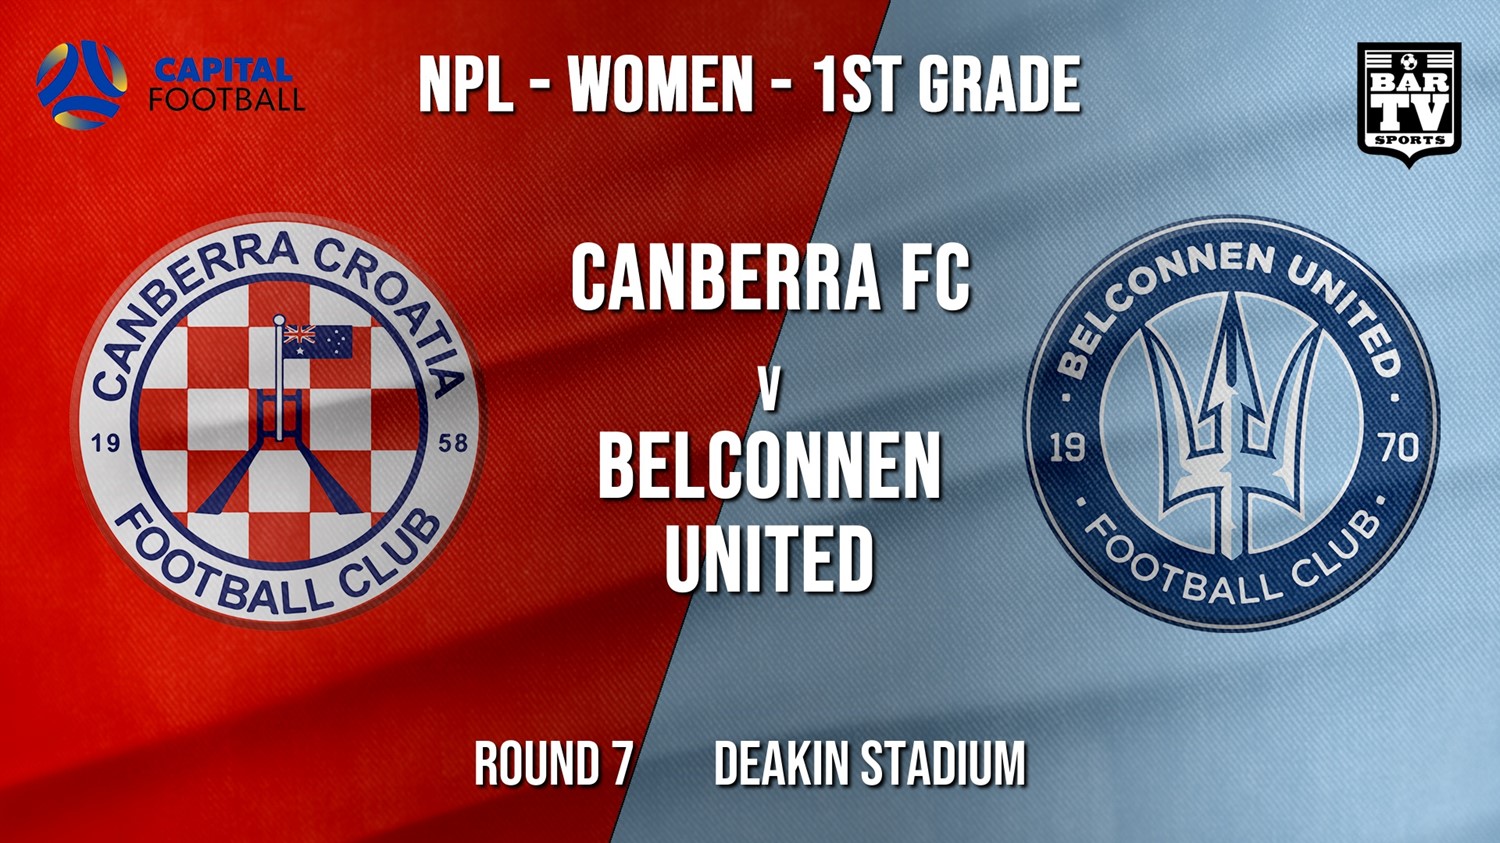 NPLW - Capital Round 7 - Canberra FC (women) v Belconnen United (women) Minigame Slate Image